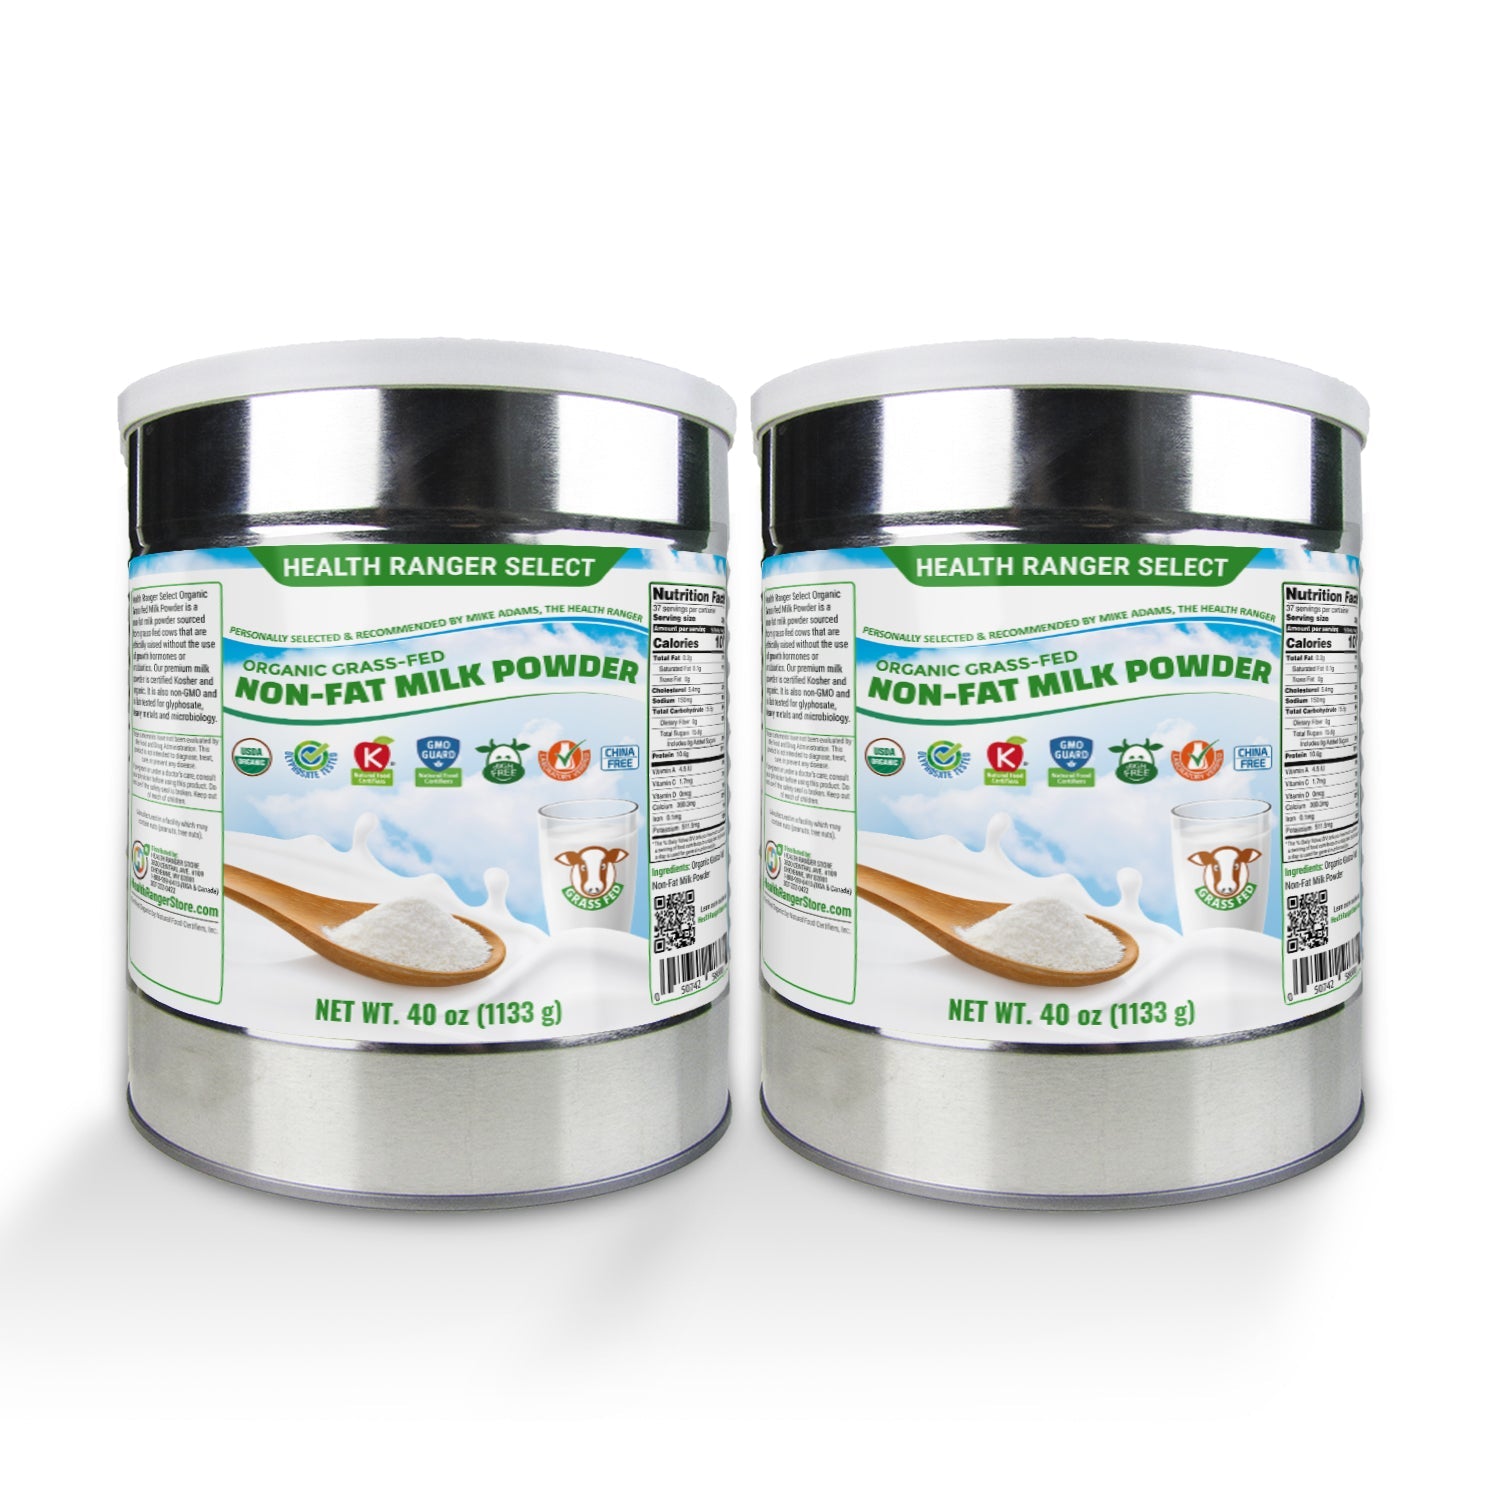 Organic Grass-Fed Non-Fat Milk Powder 40 oz (1133 g, 